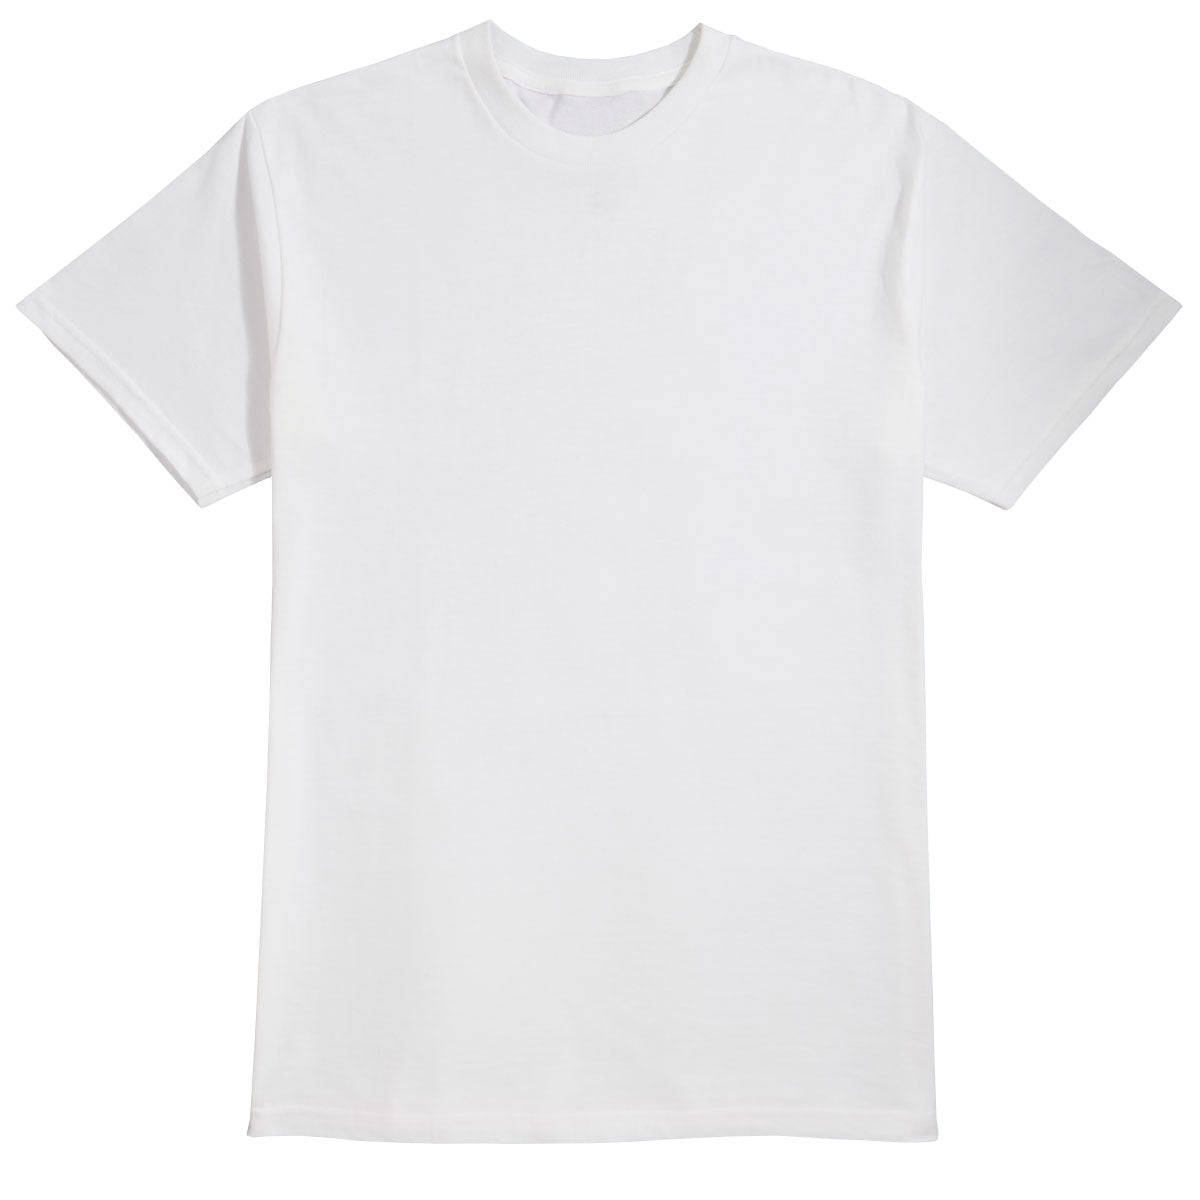 Alien Workshop Spectrum Color-Up T-Shirt - White - SM image 1